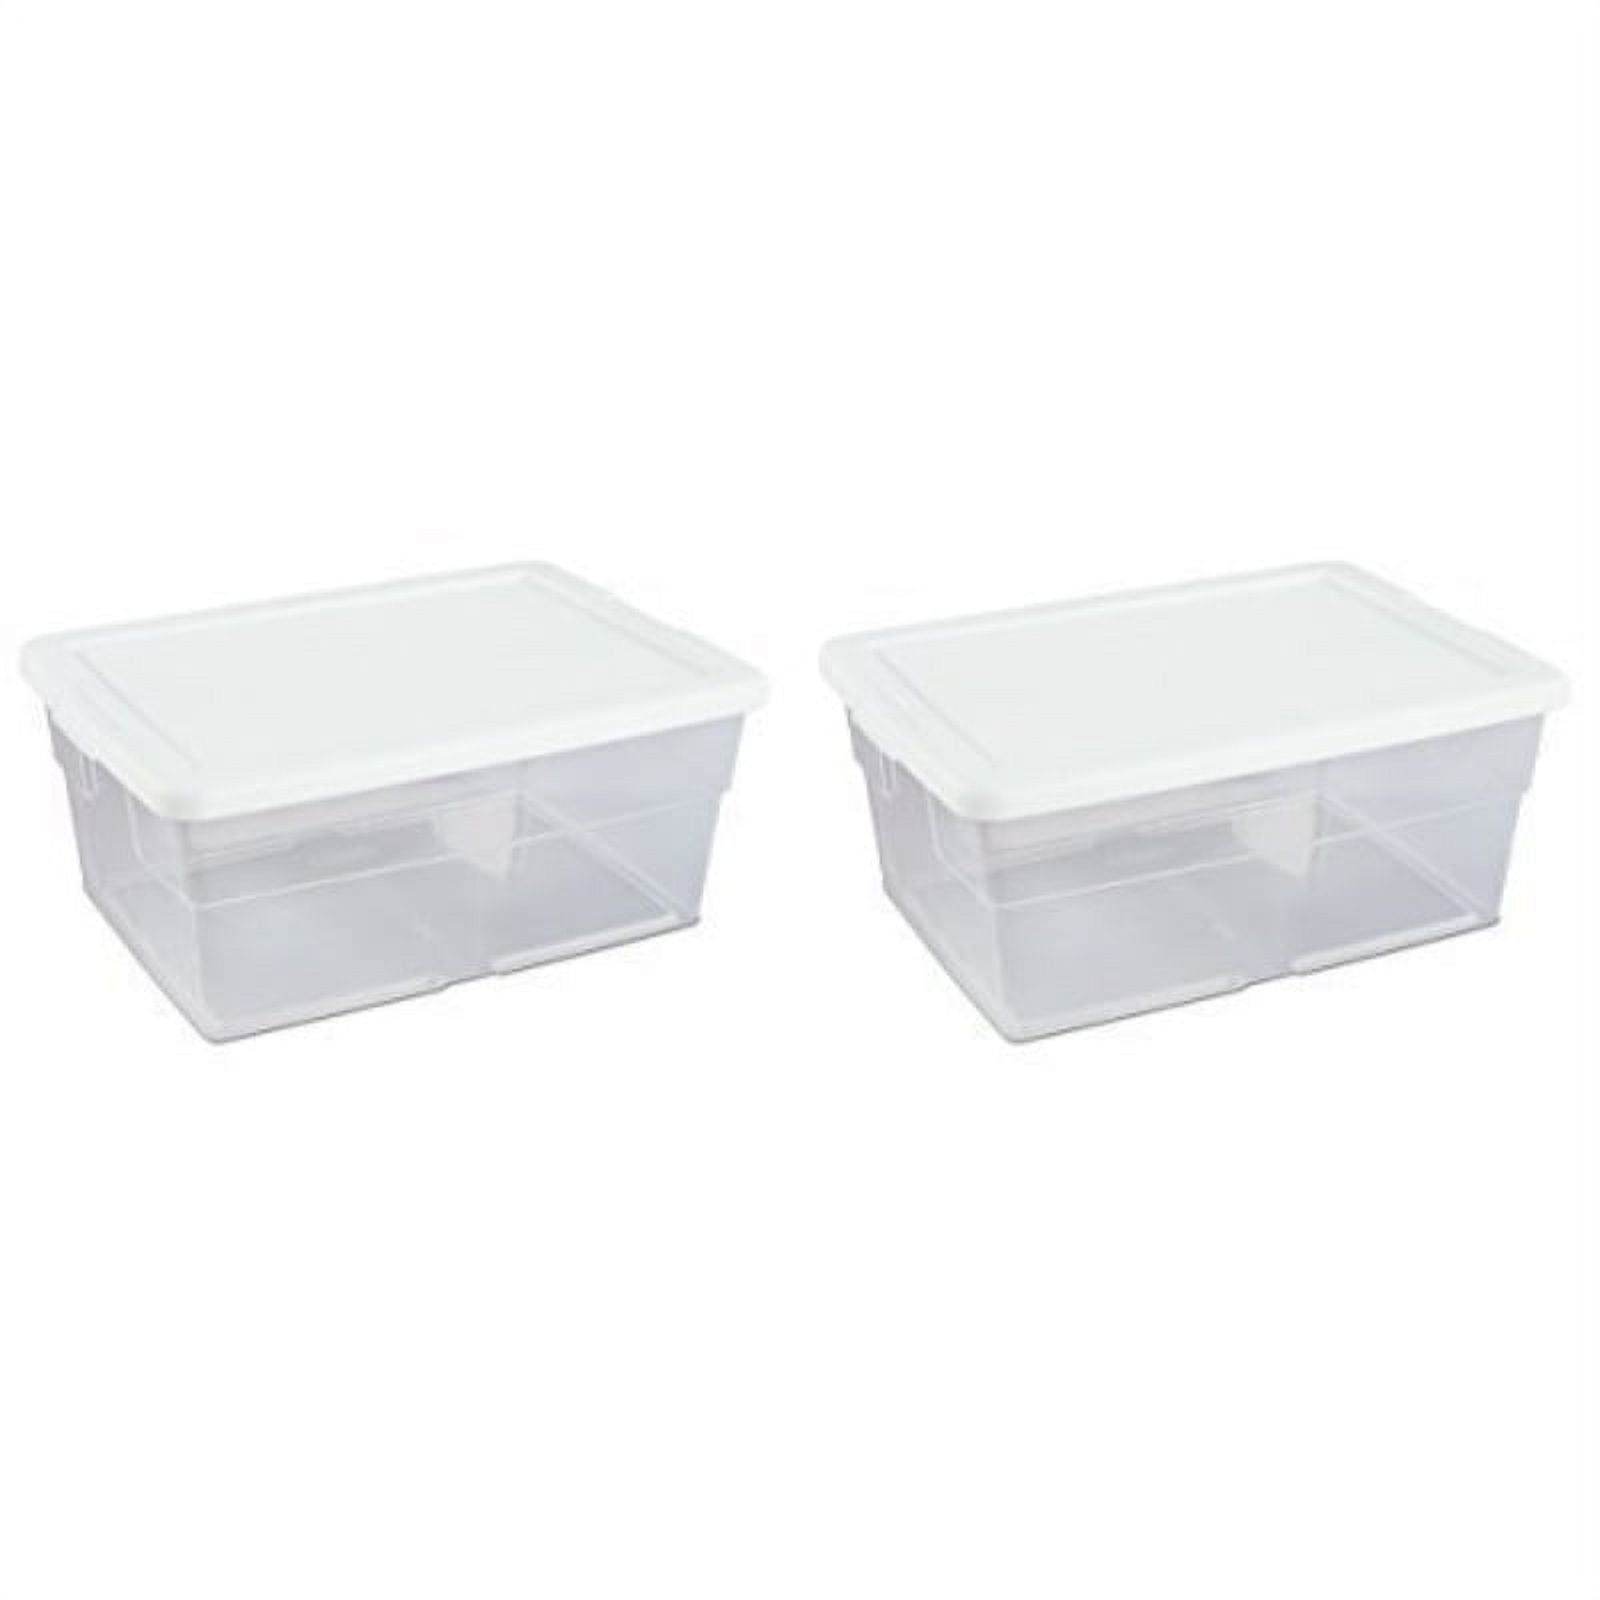 Sterilite Storage Box with Lid - White/Clear, 16 qt - Kroger